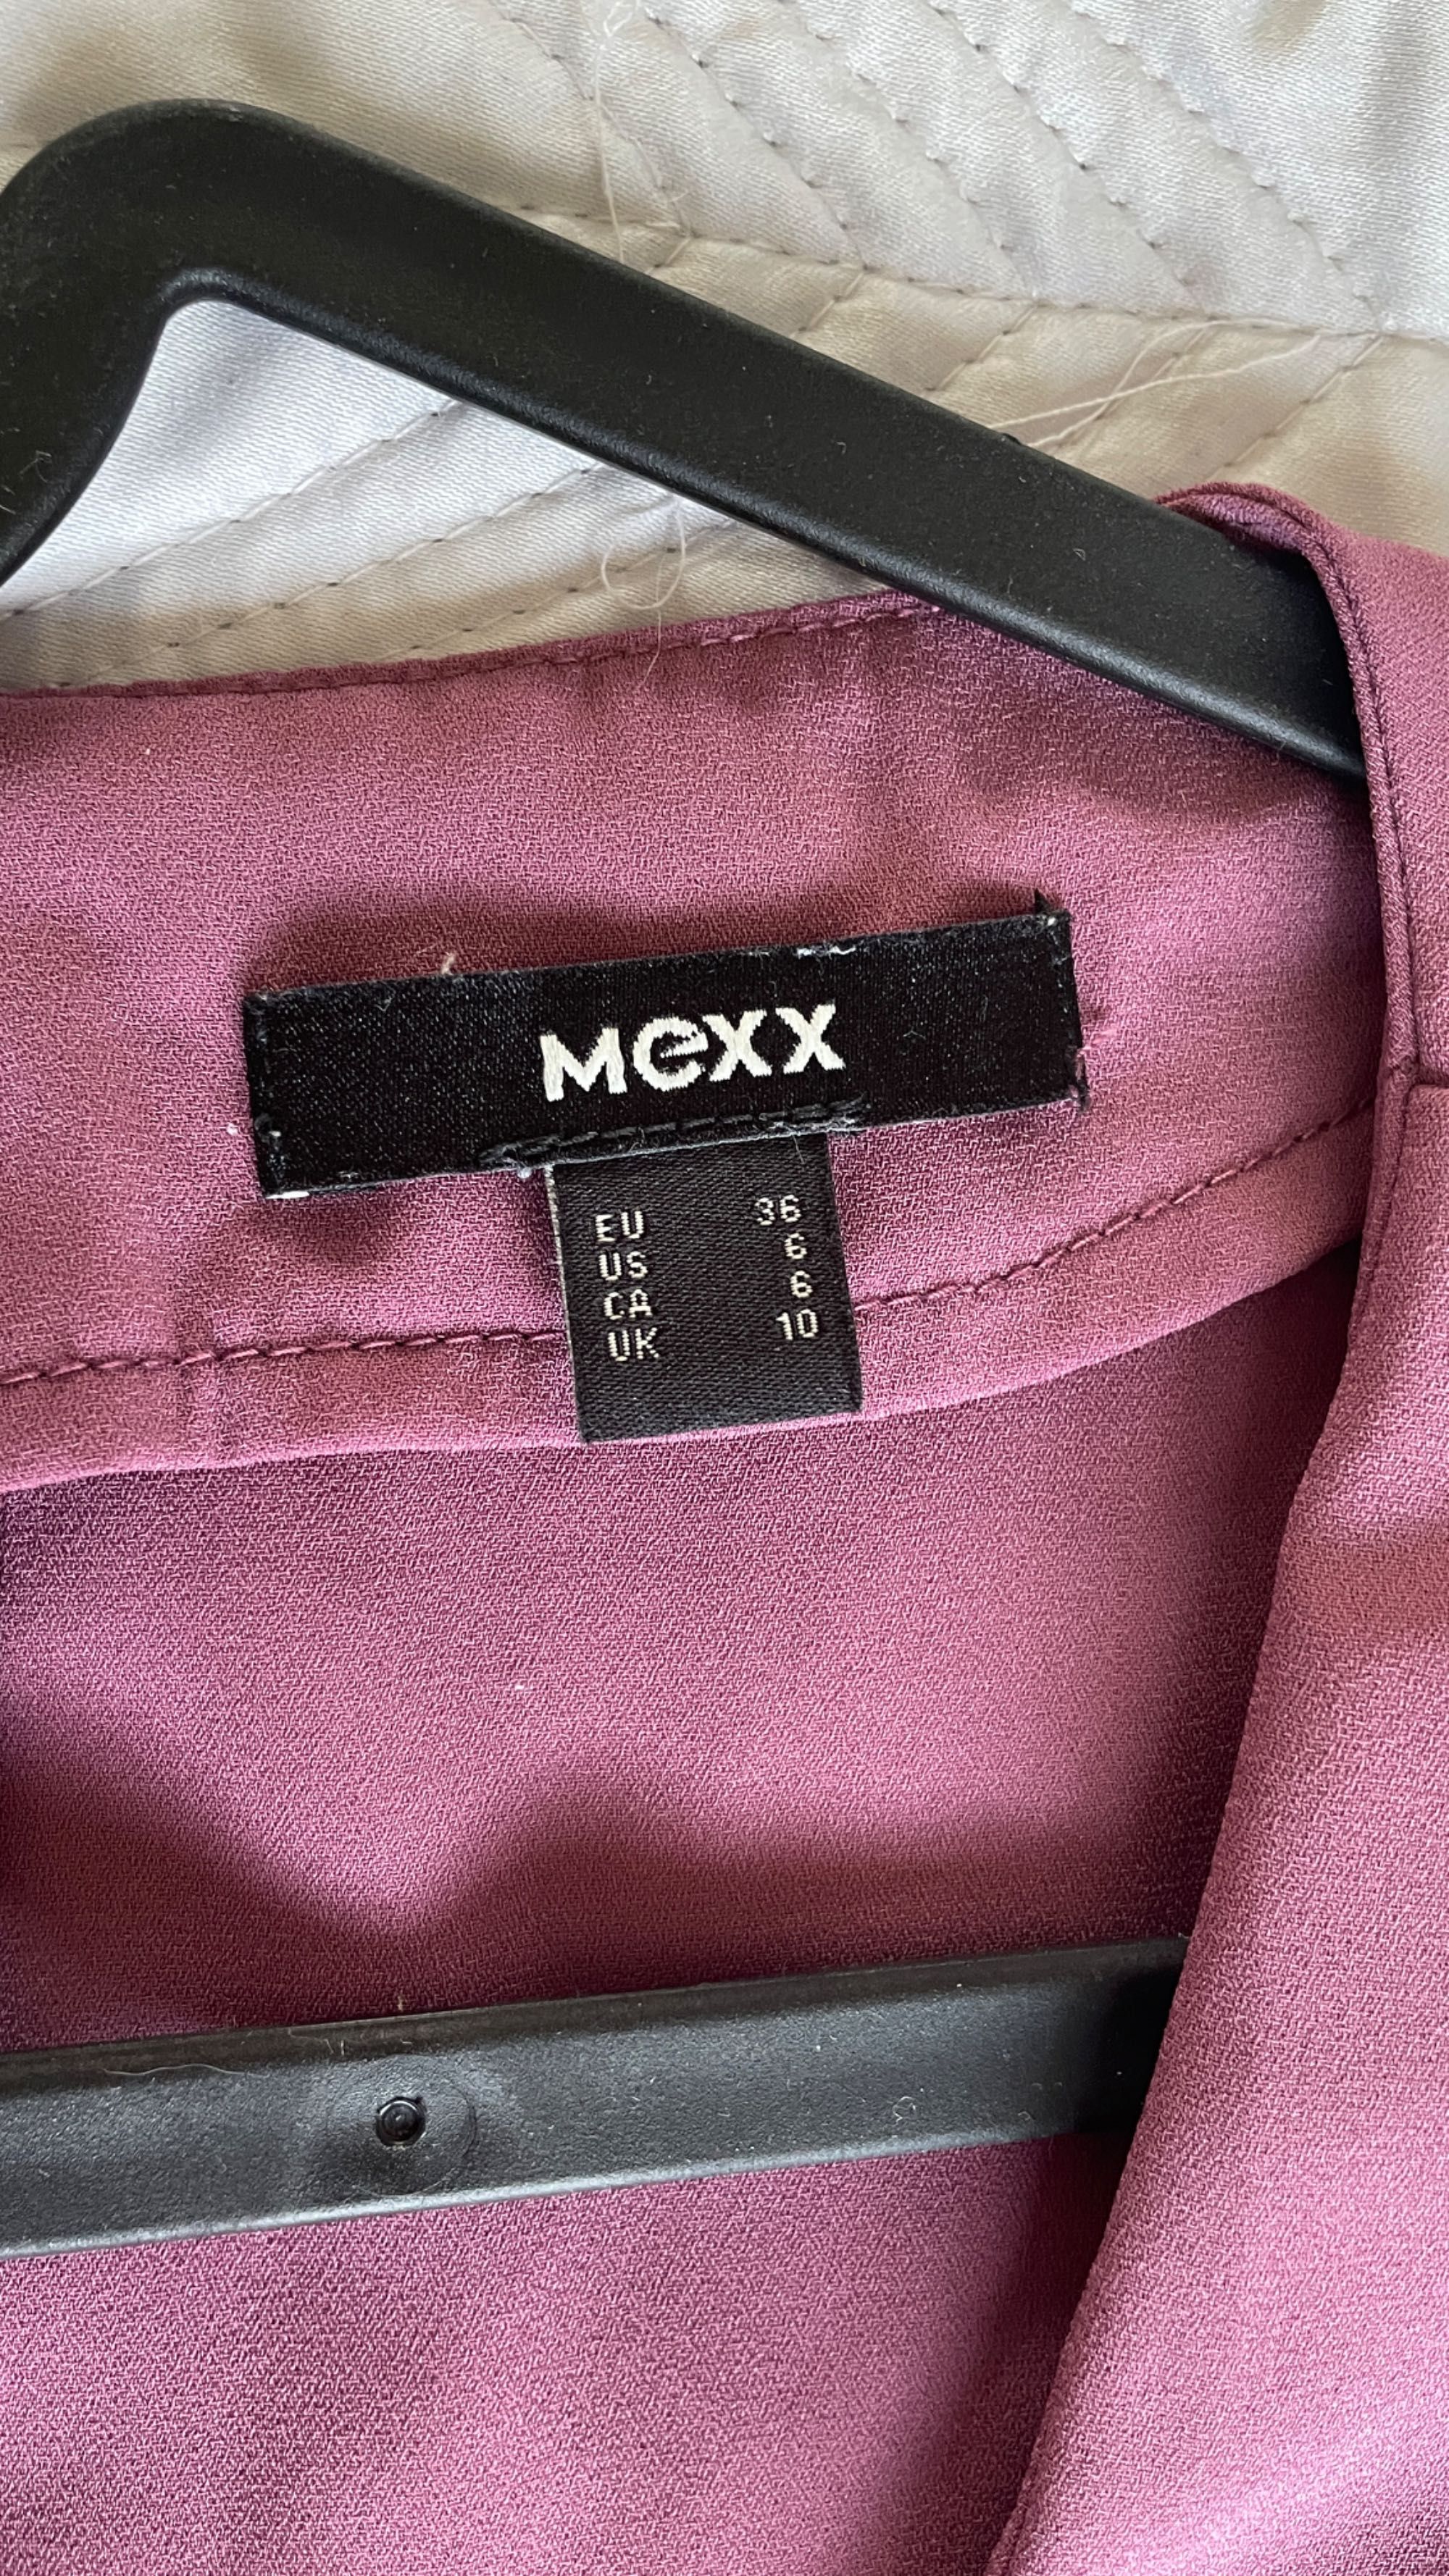 Bluza Mexx dama roz-mov, office, eleganta, masura 36